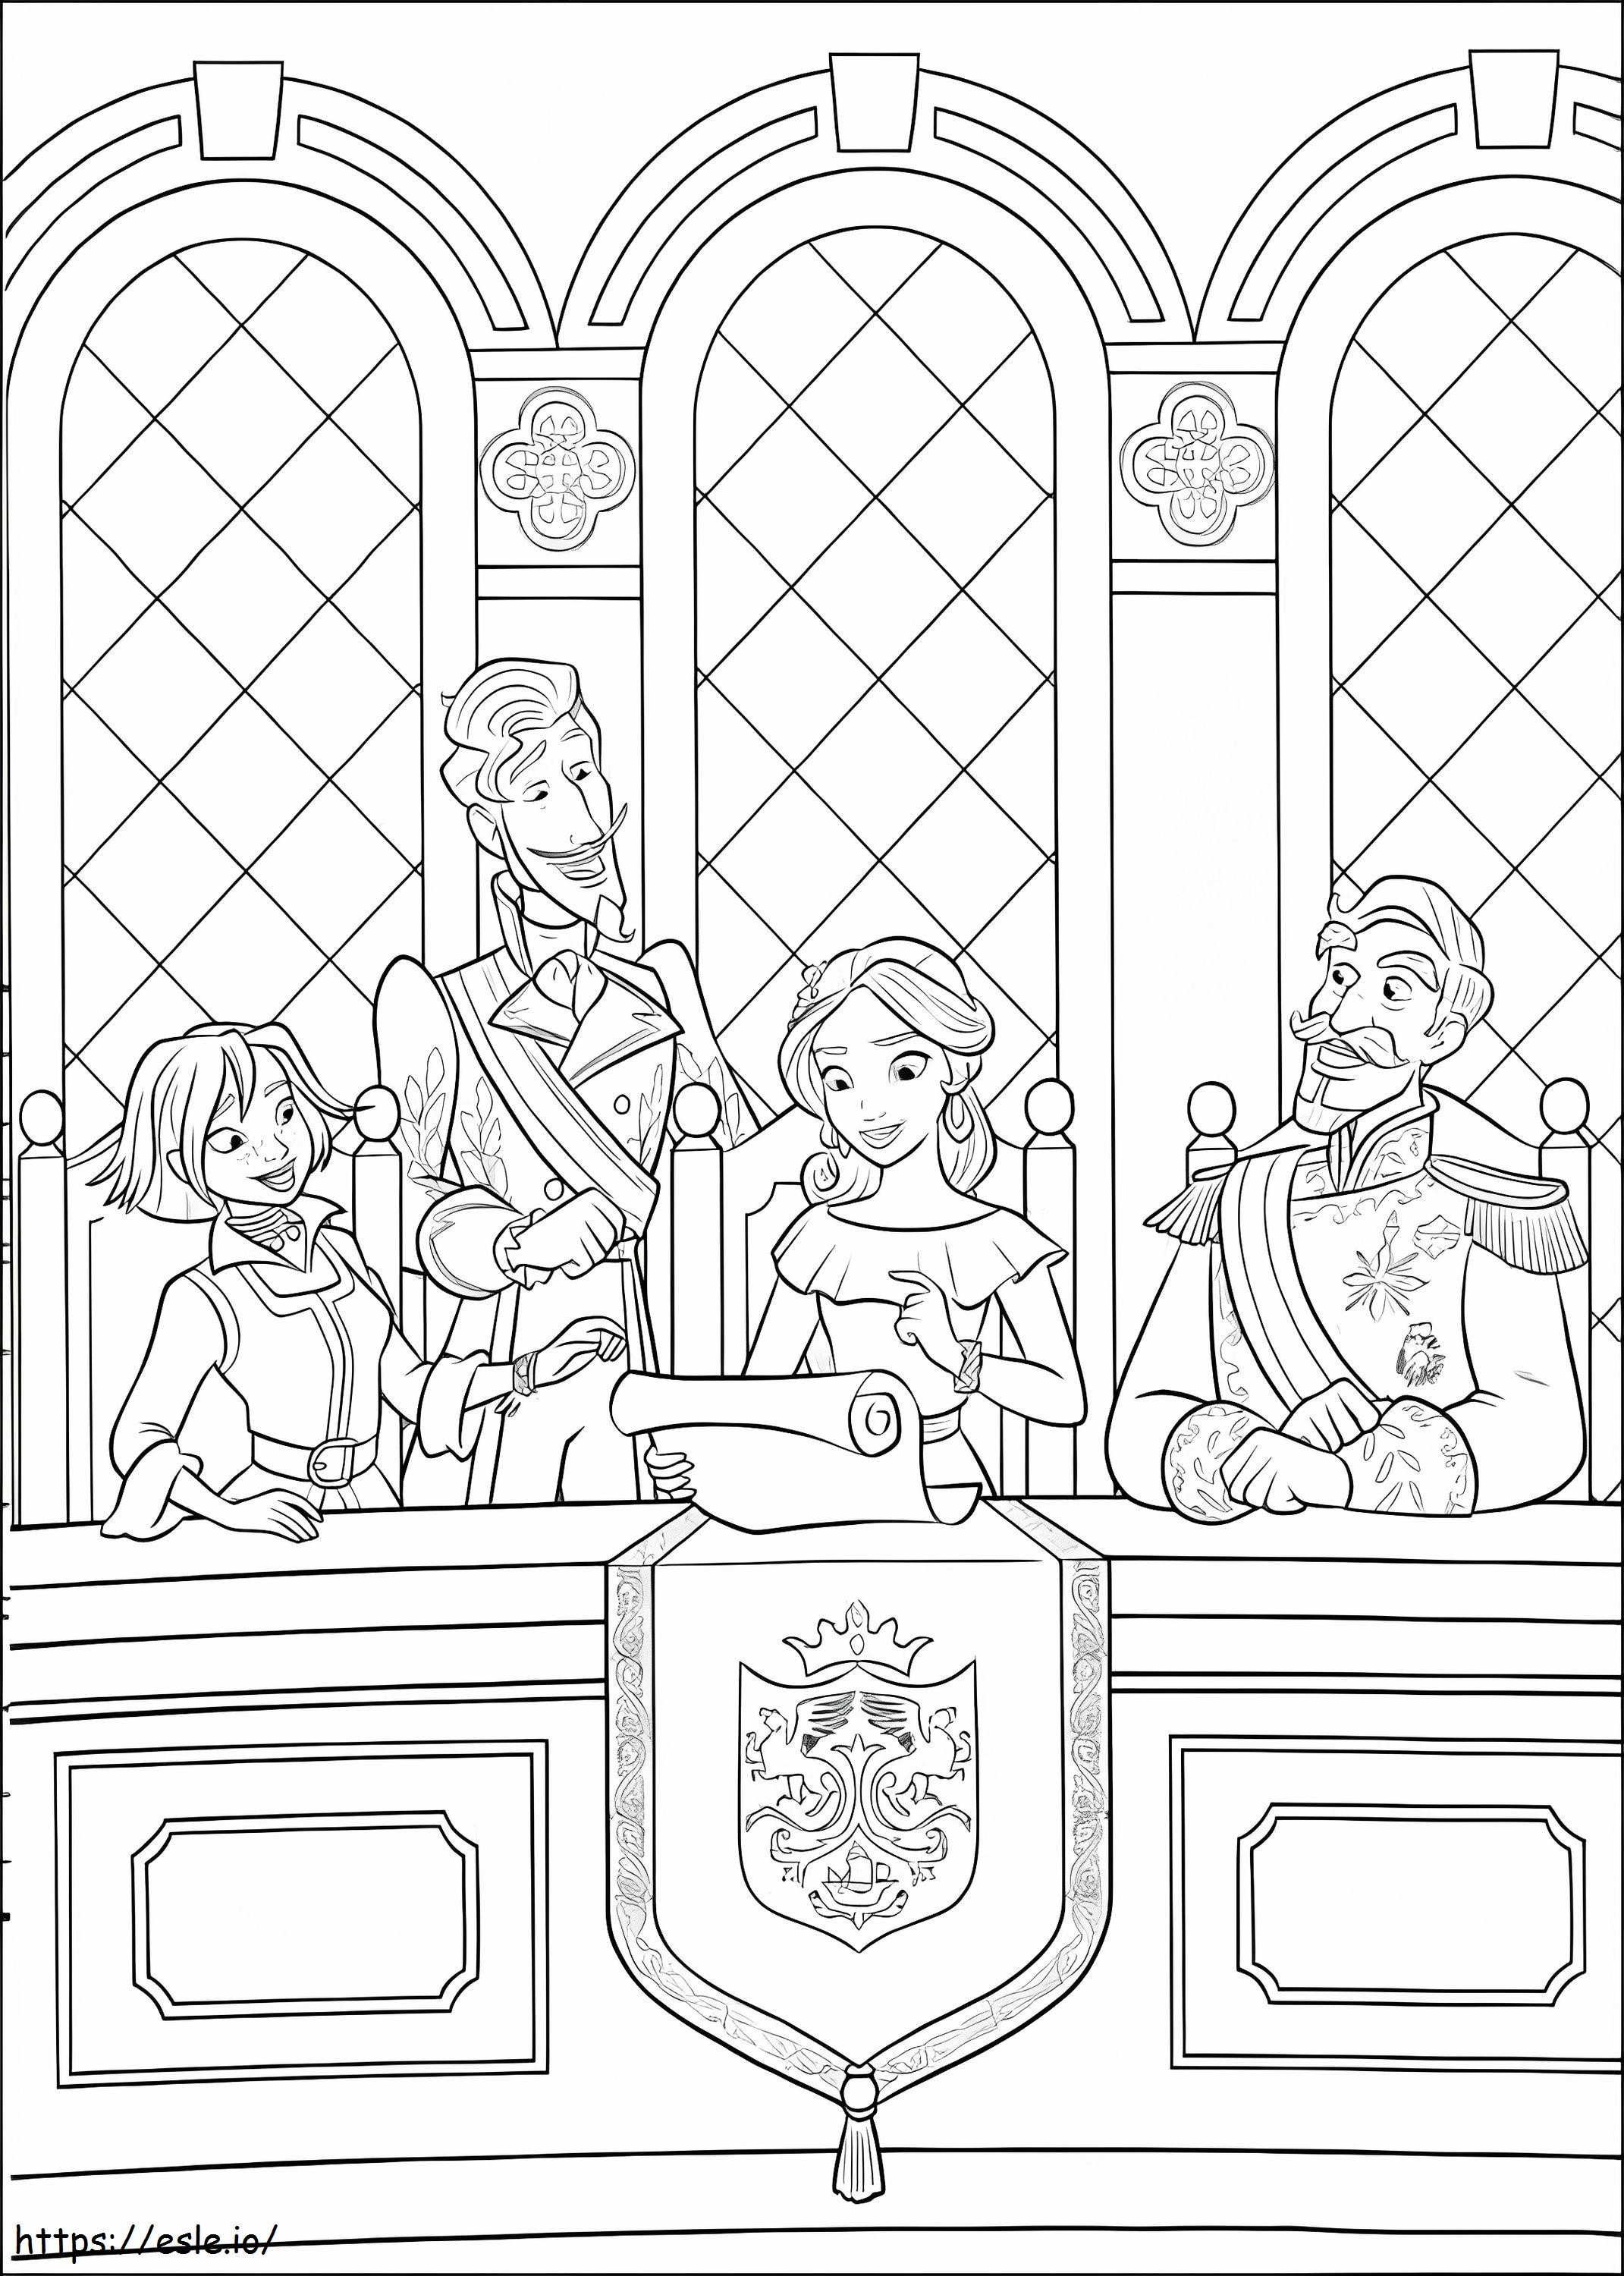 Princess Elena And Family coloring page